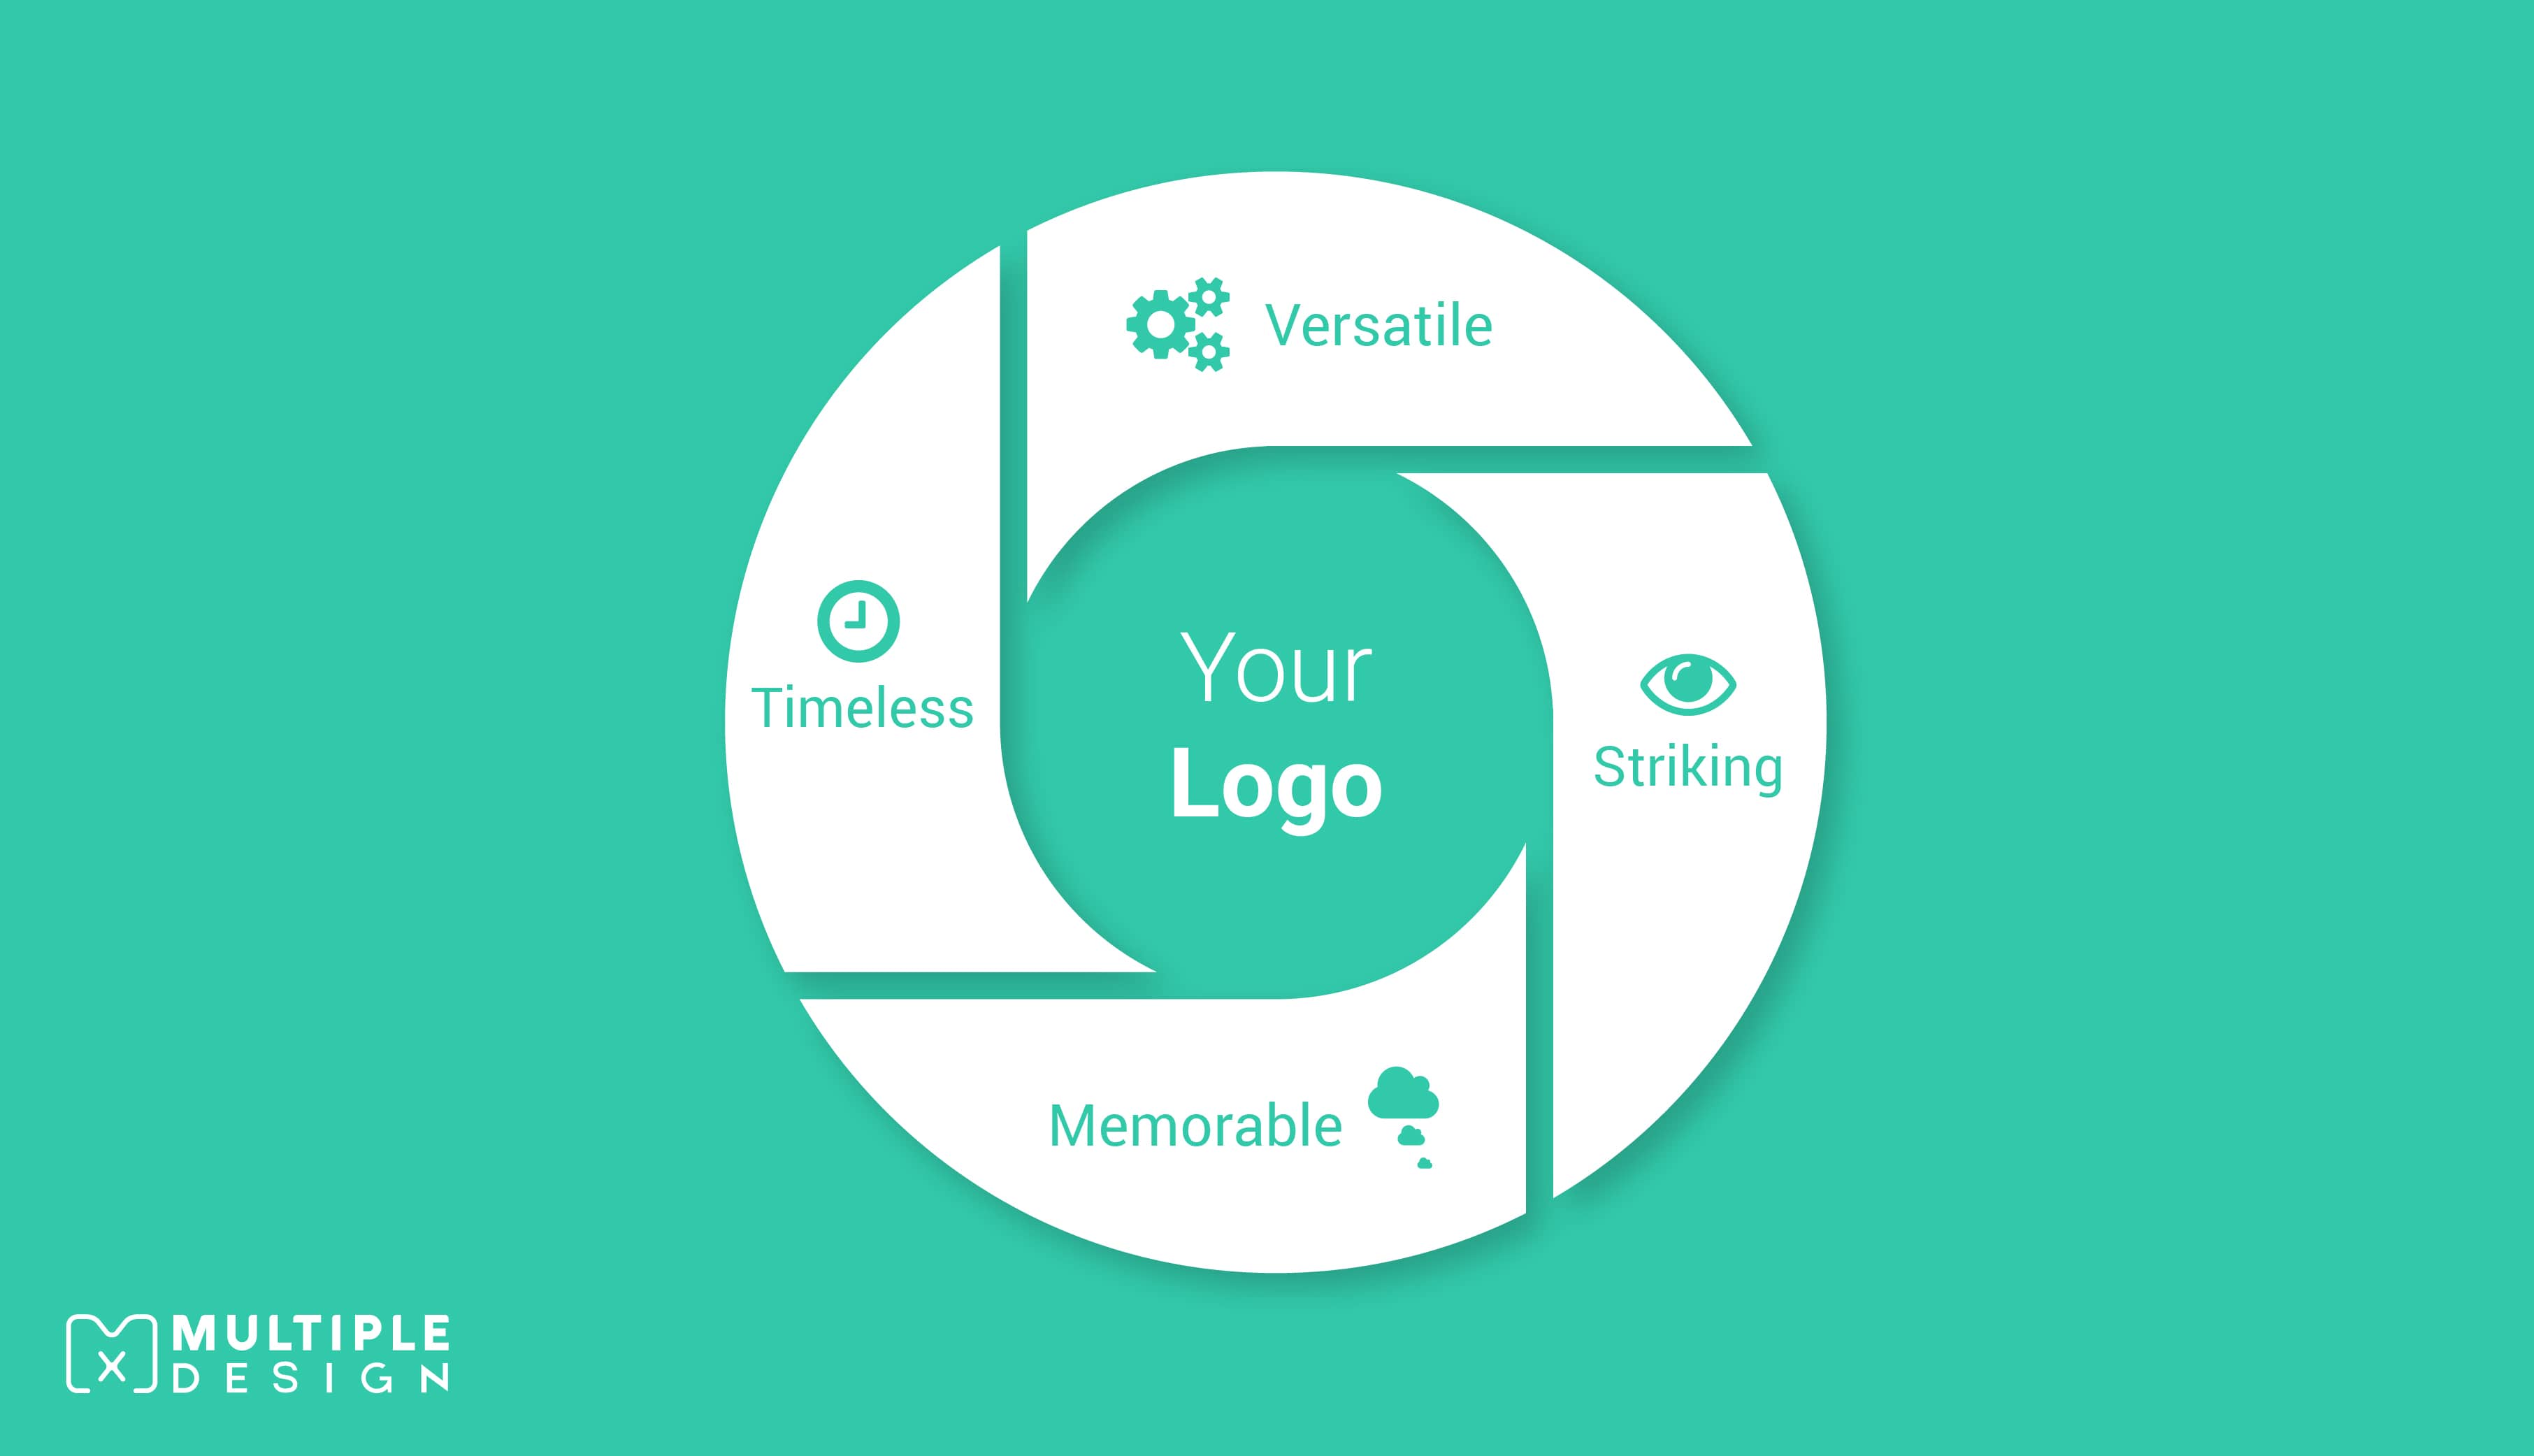 Your Logo - Versatile, Timeless, Memorable, Striking